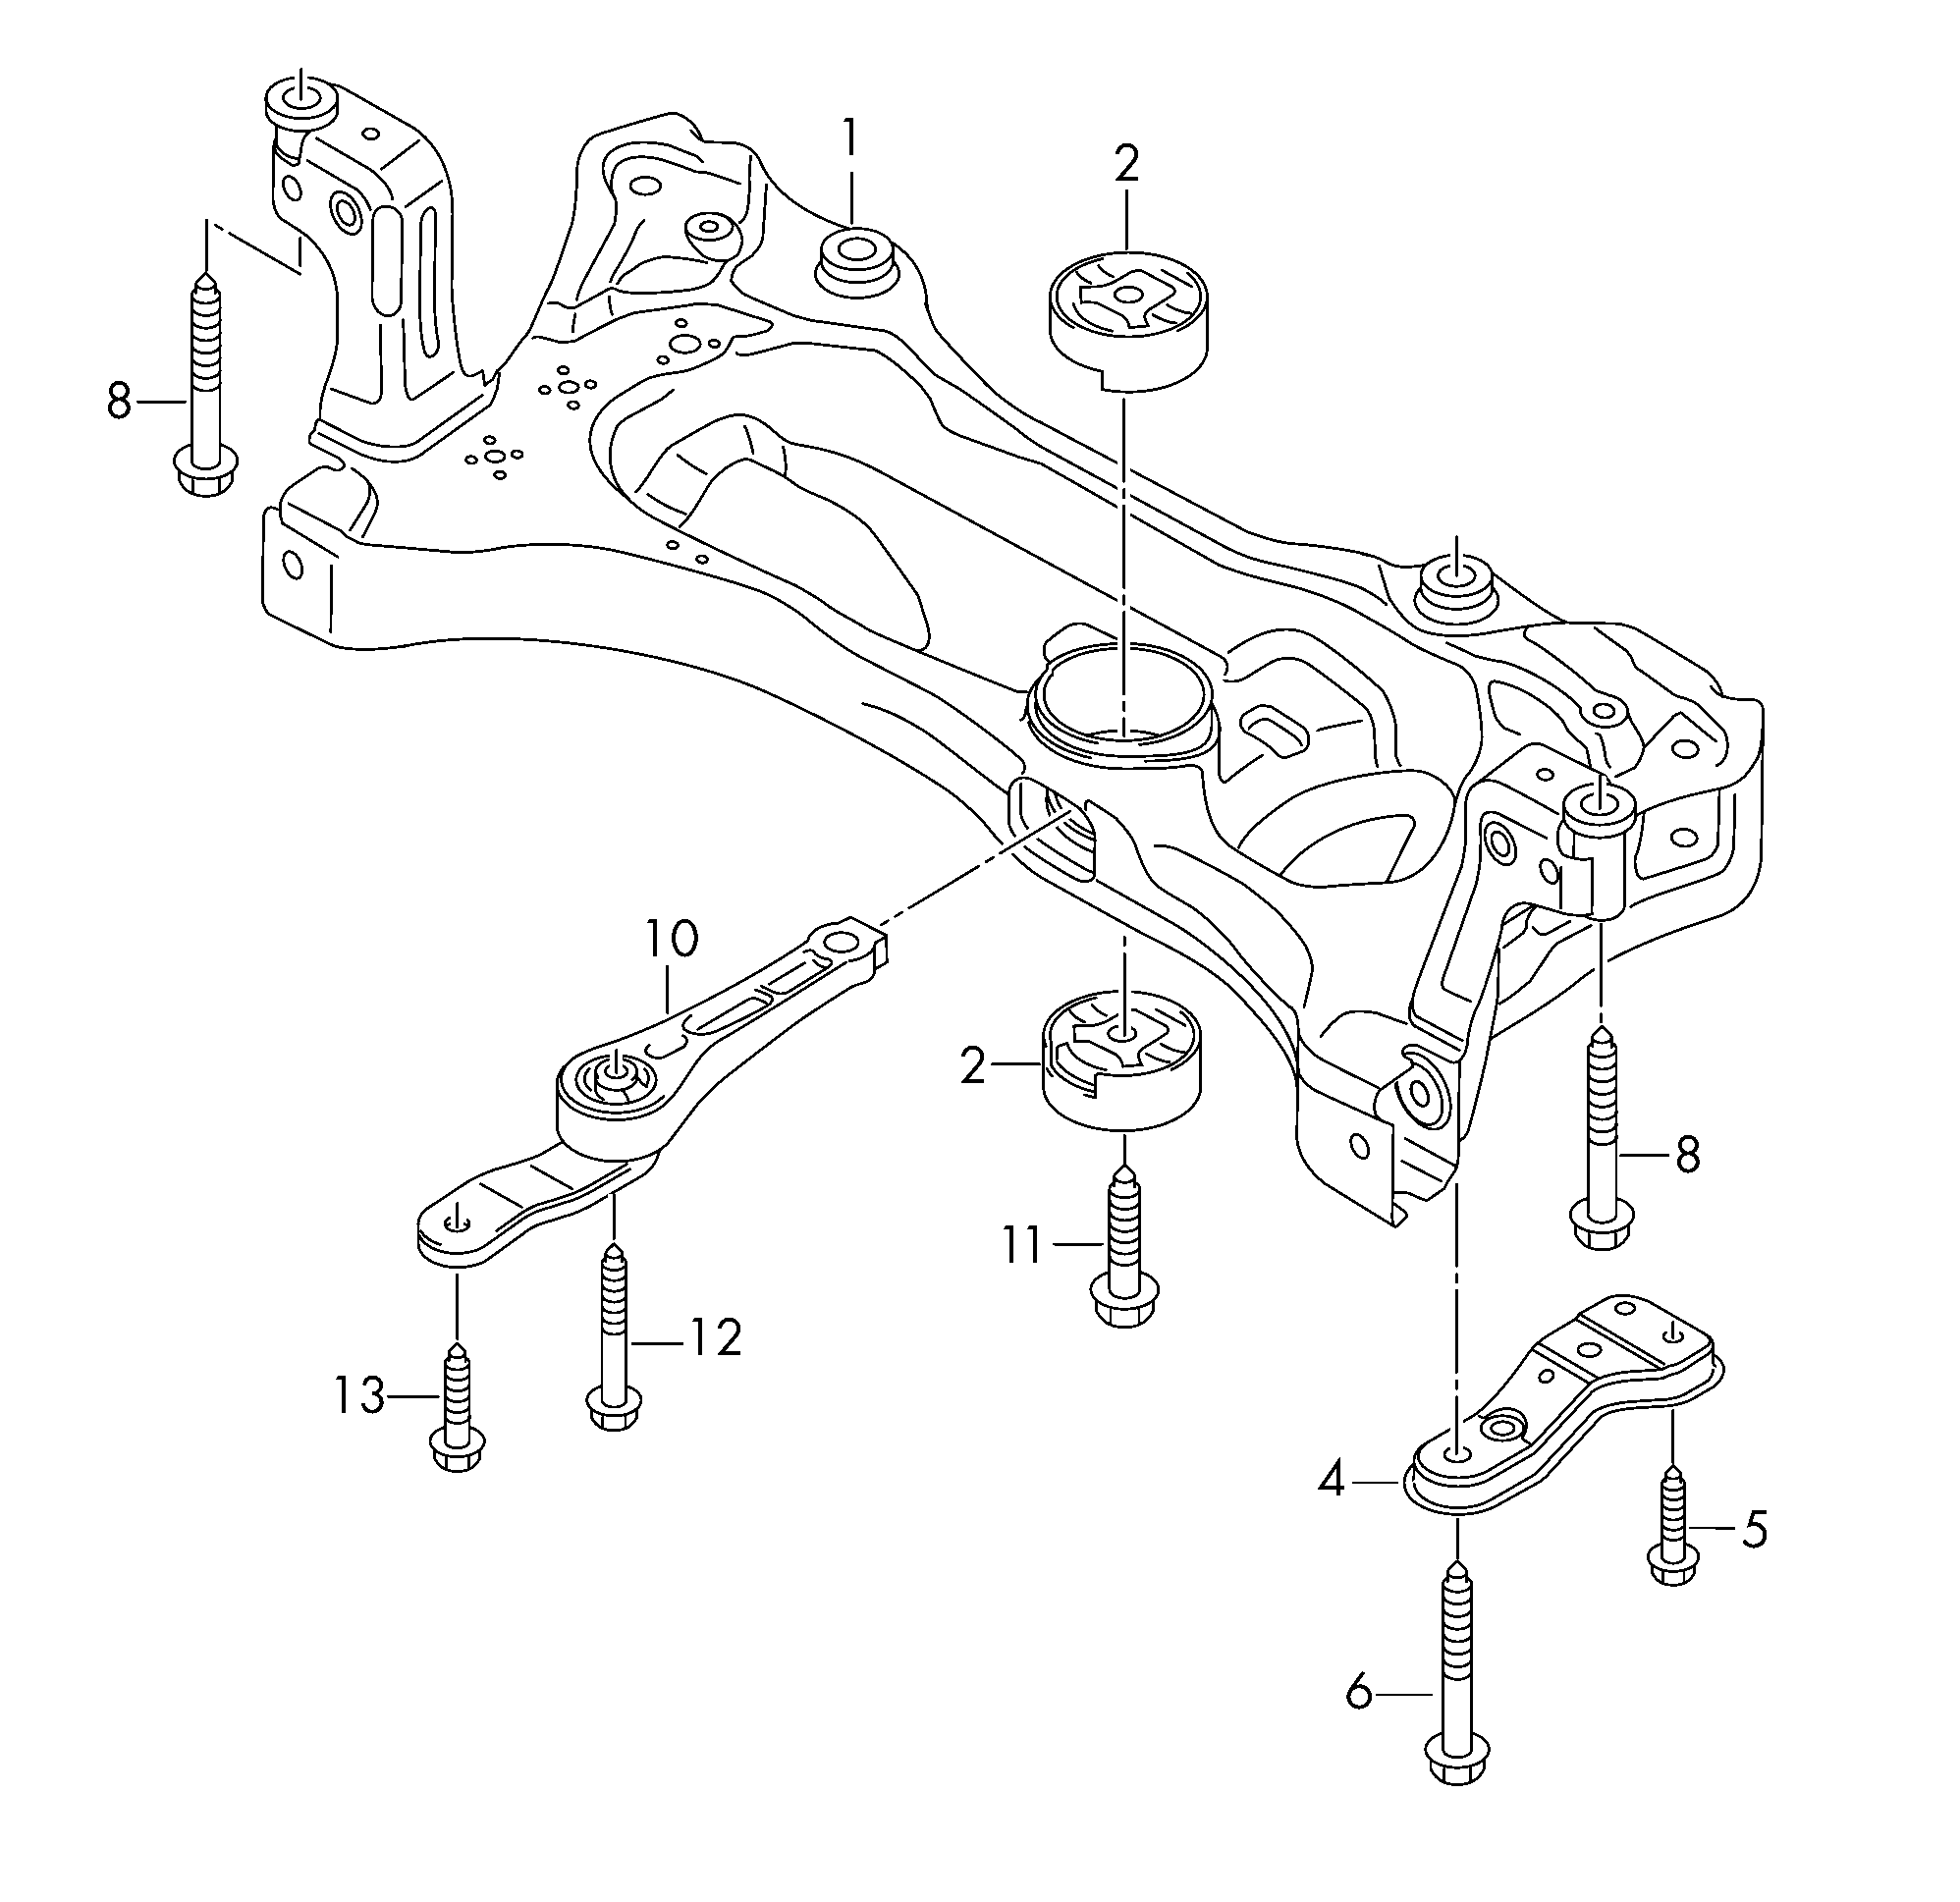 assembly carrier - Golf/Variant/4Motion(GOLF)  